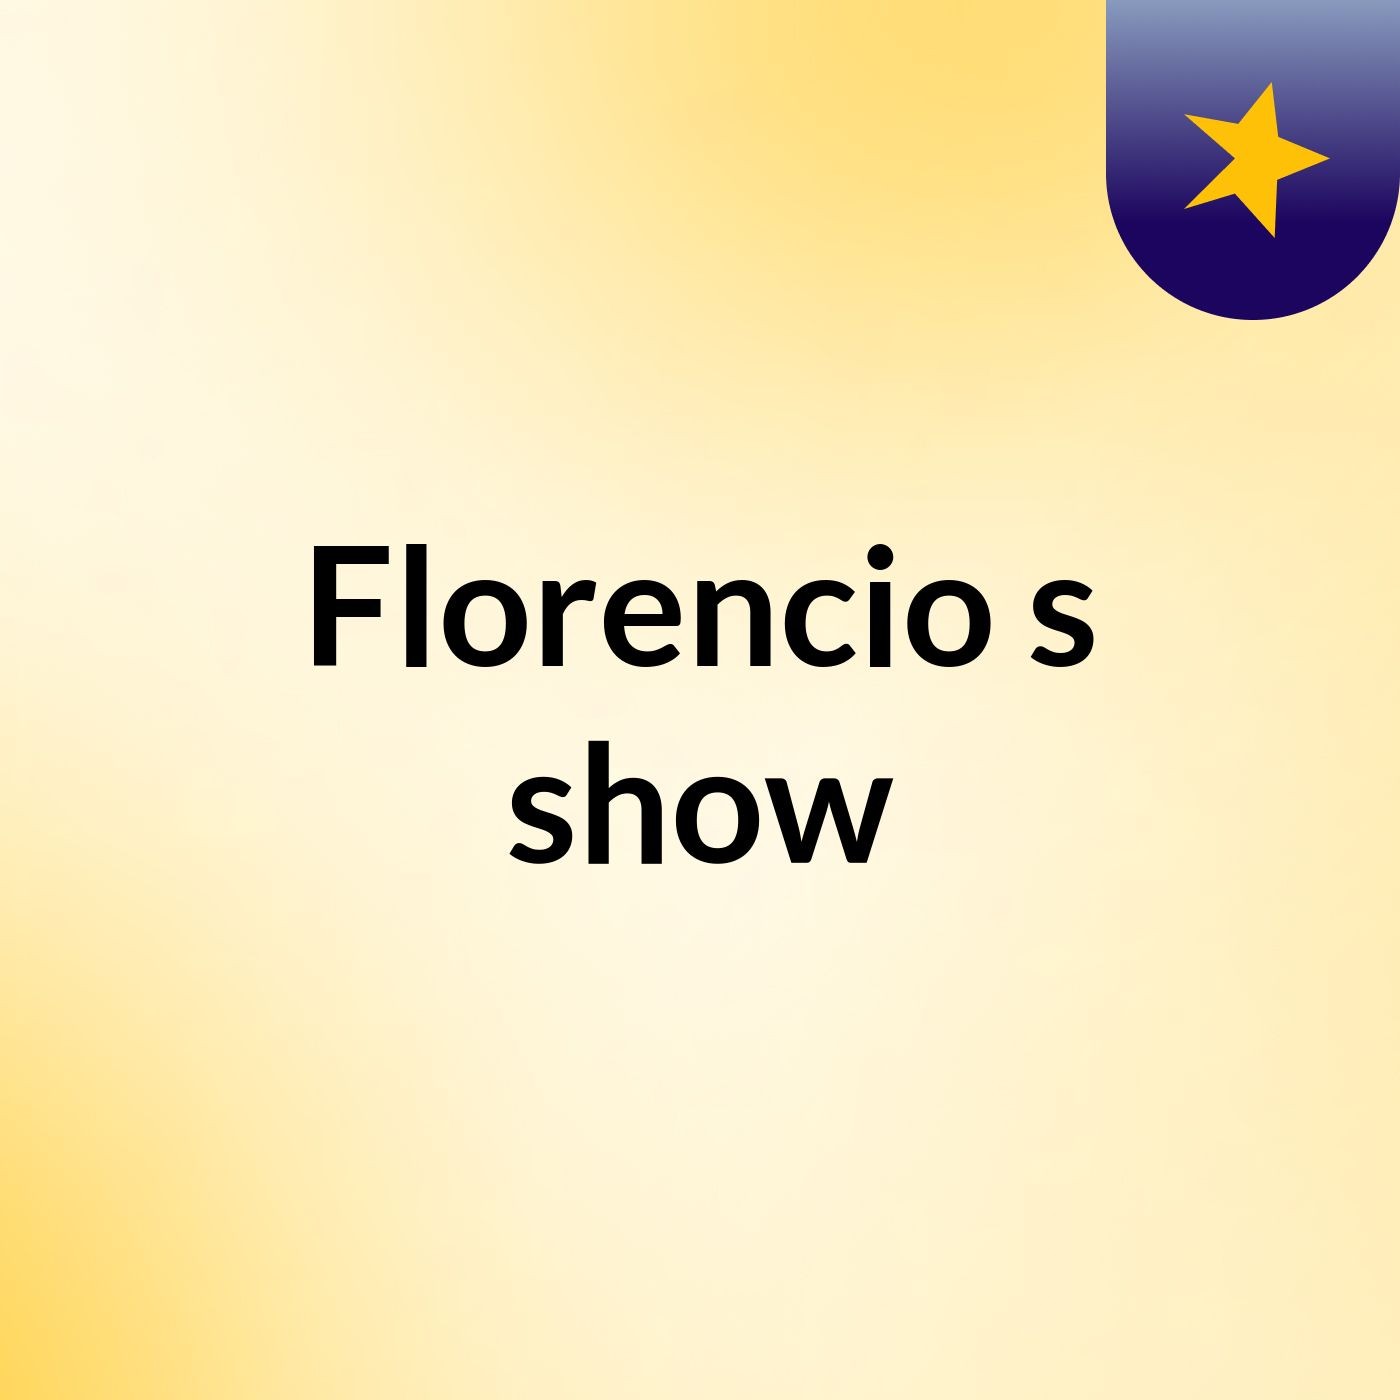 Florencio's show